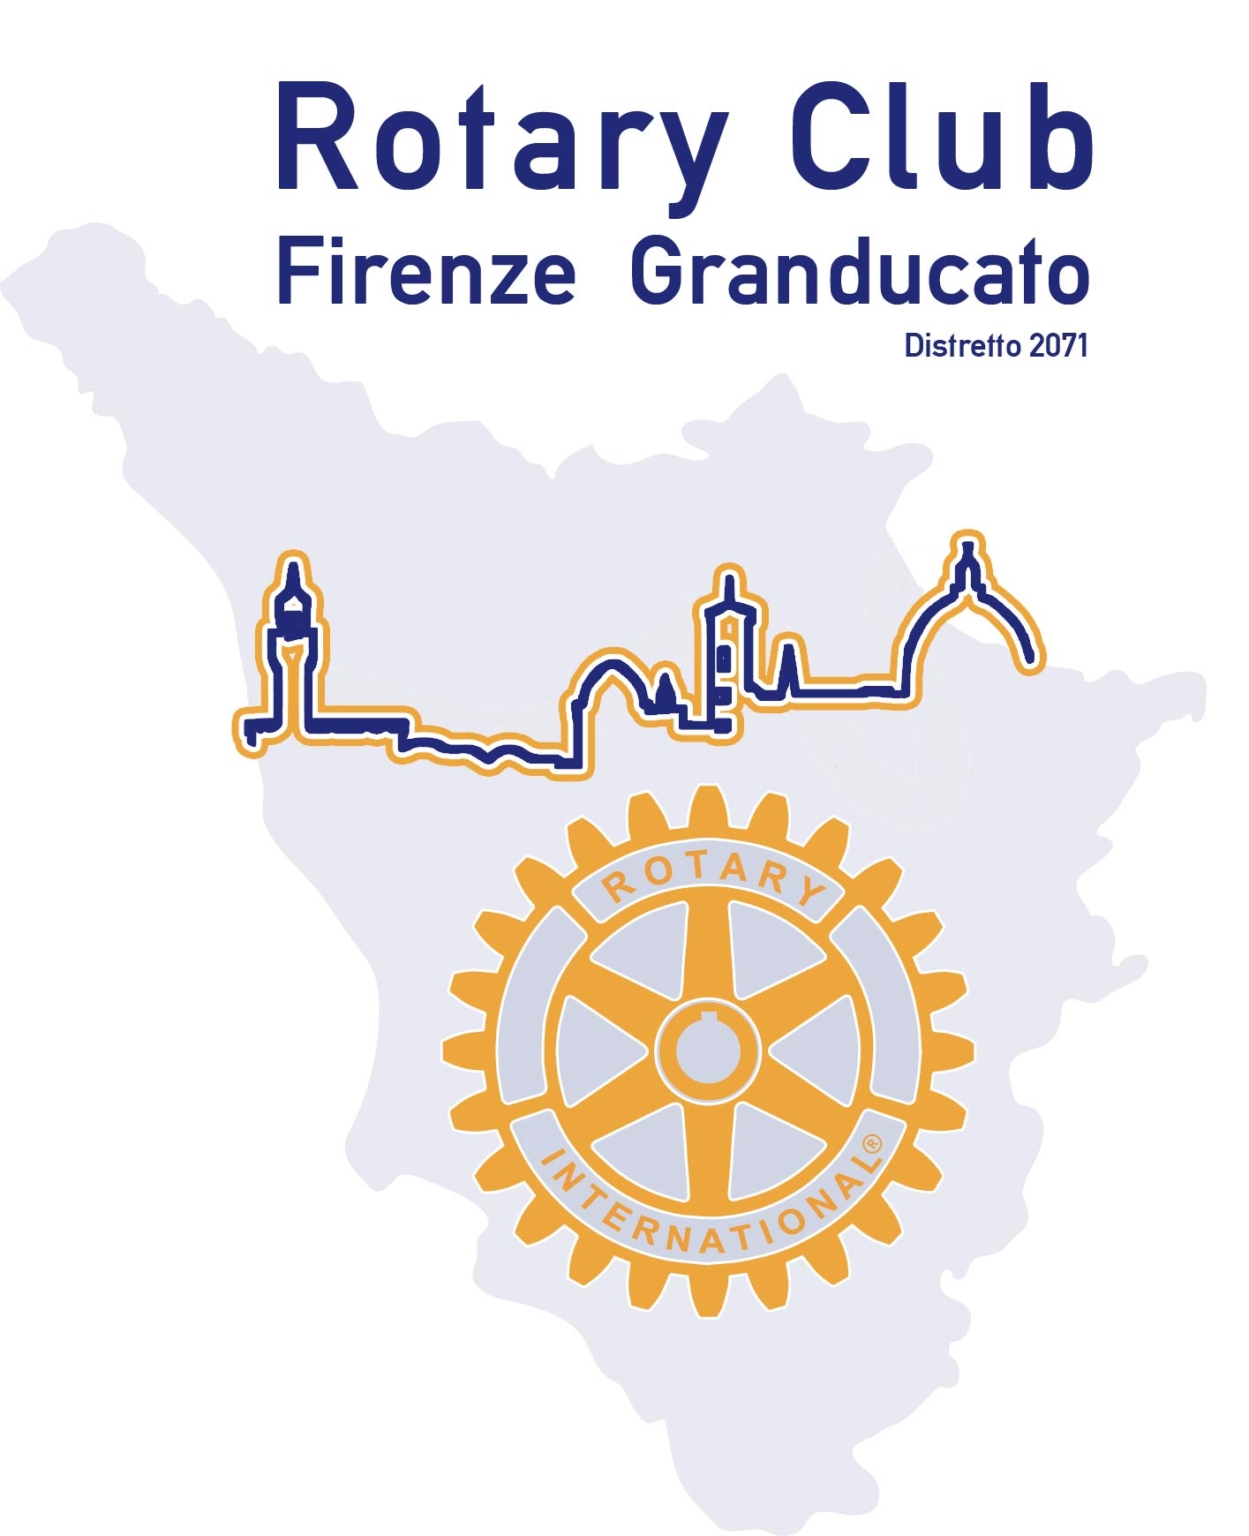 Rotary Club Firenze Granducato